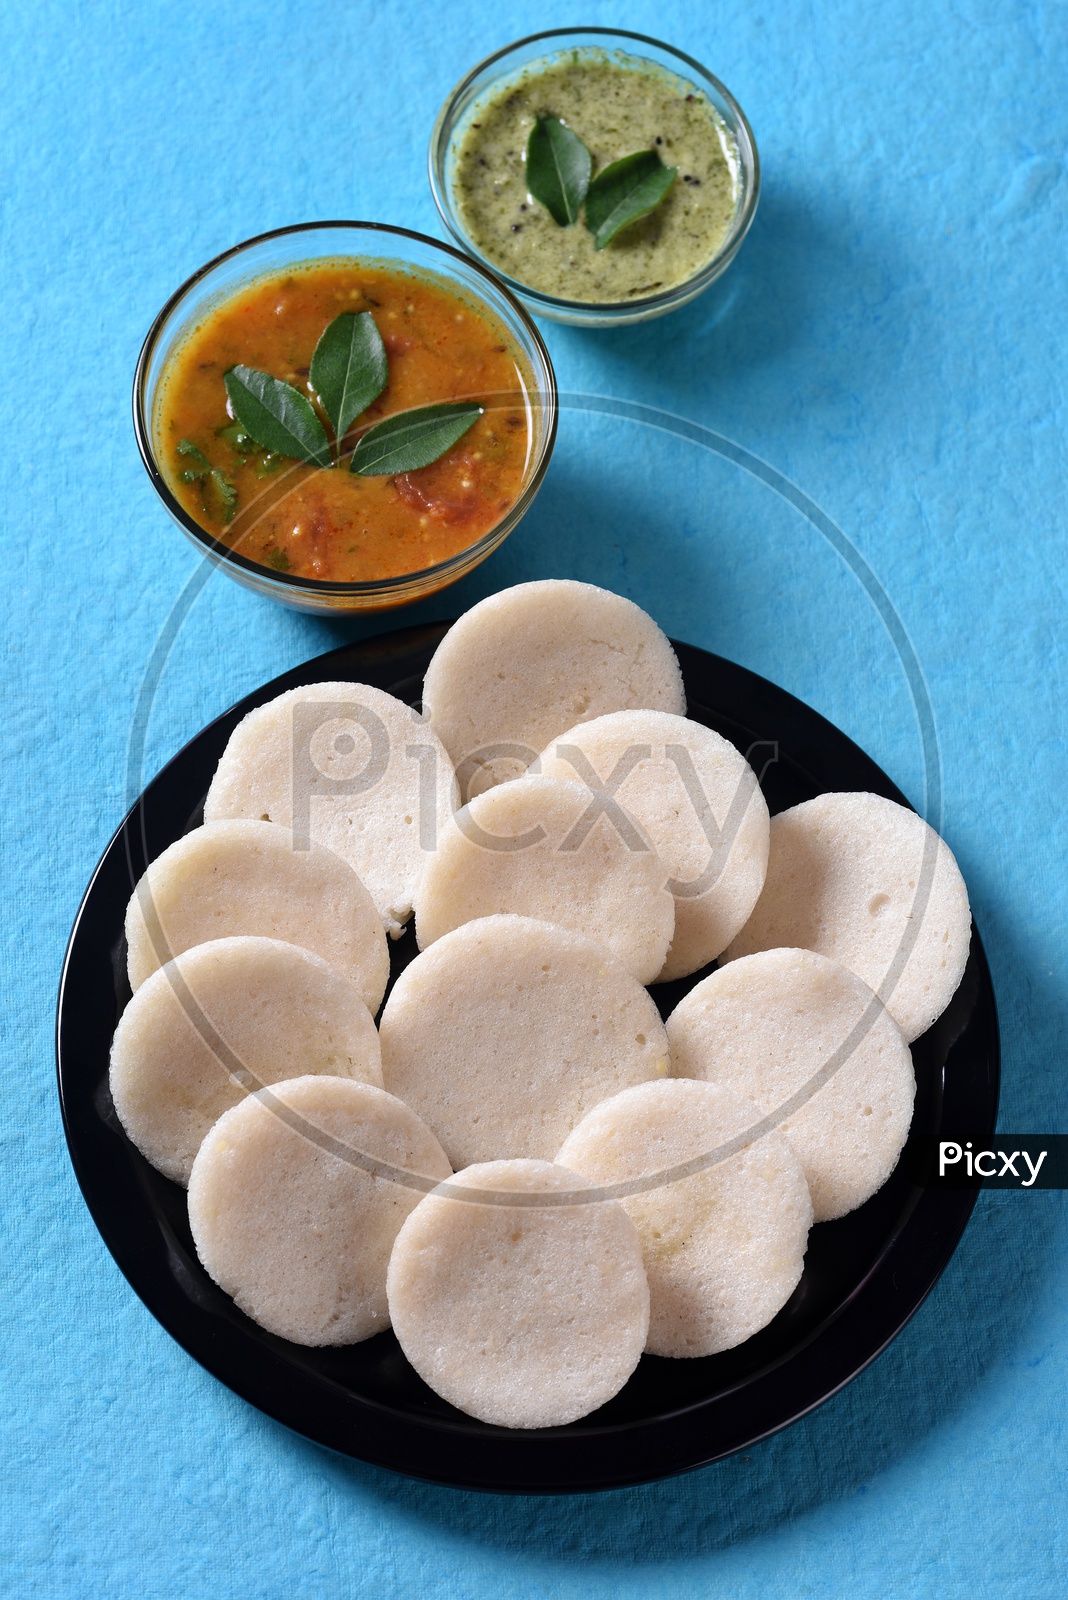 Idli served with sambar and coconut chutney on blue background